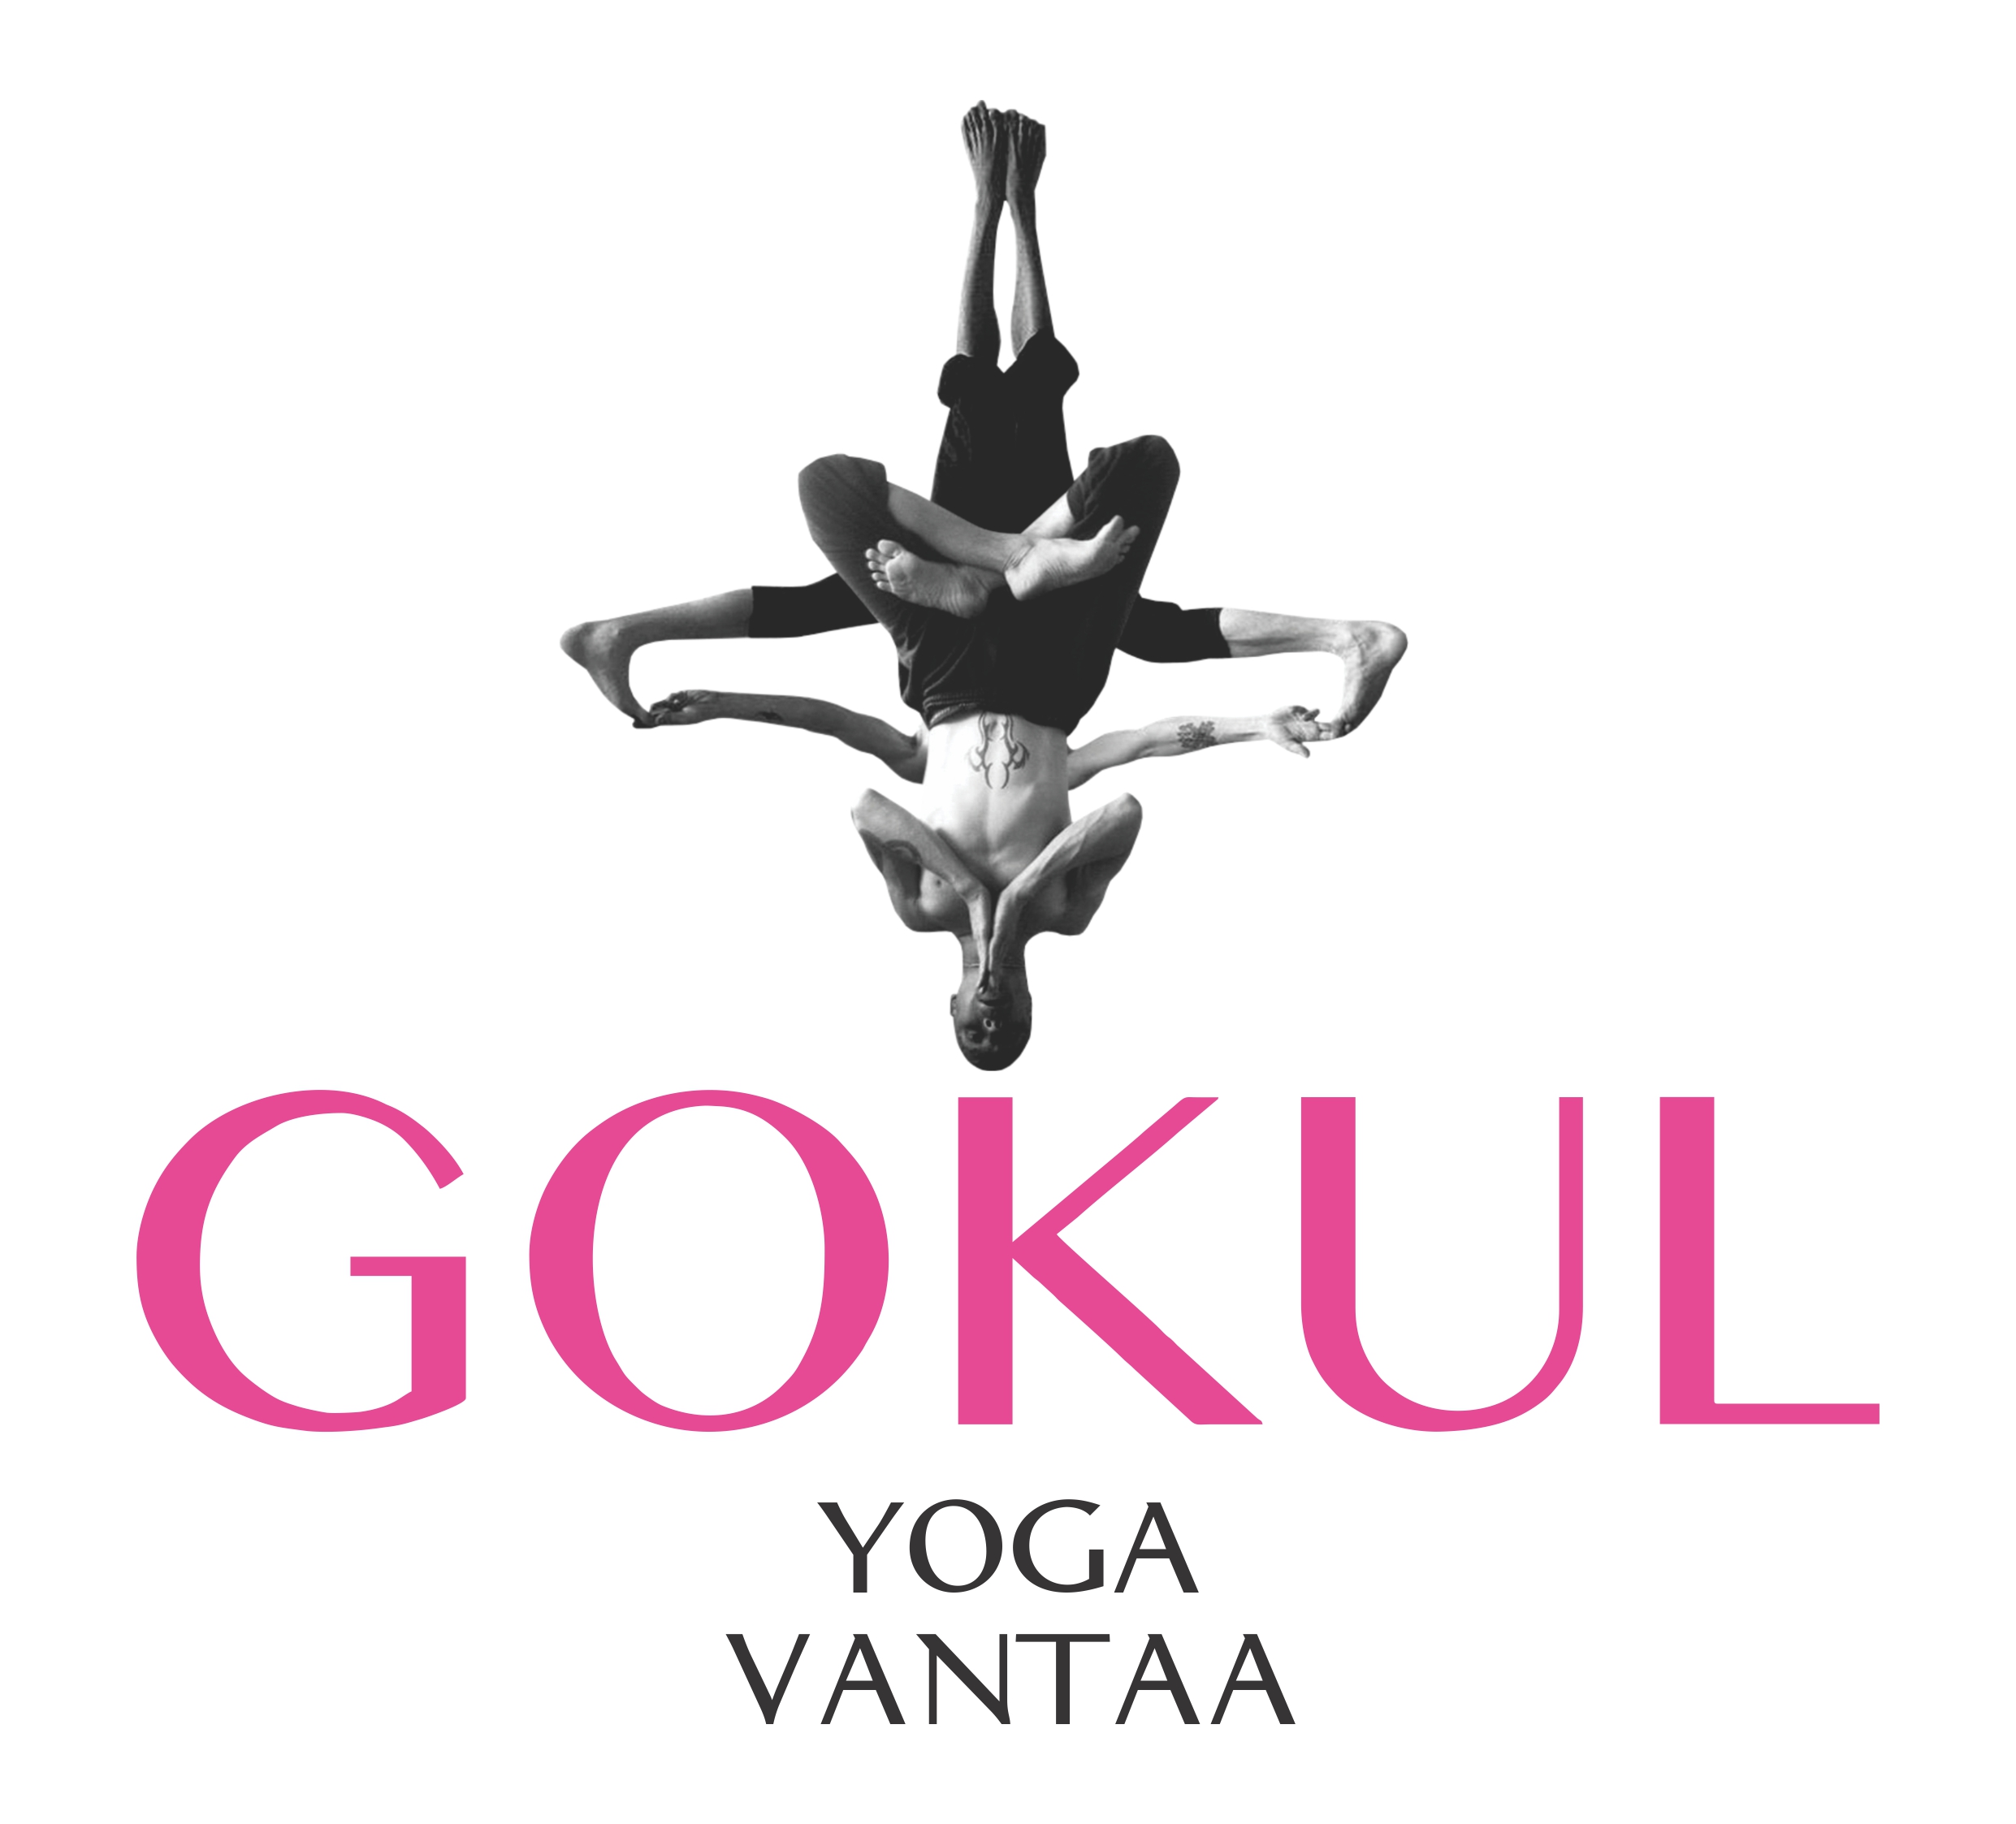 Gokul Yoga Vantaan logo.